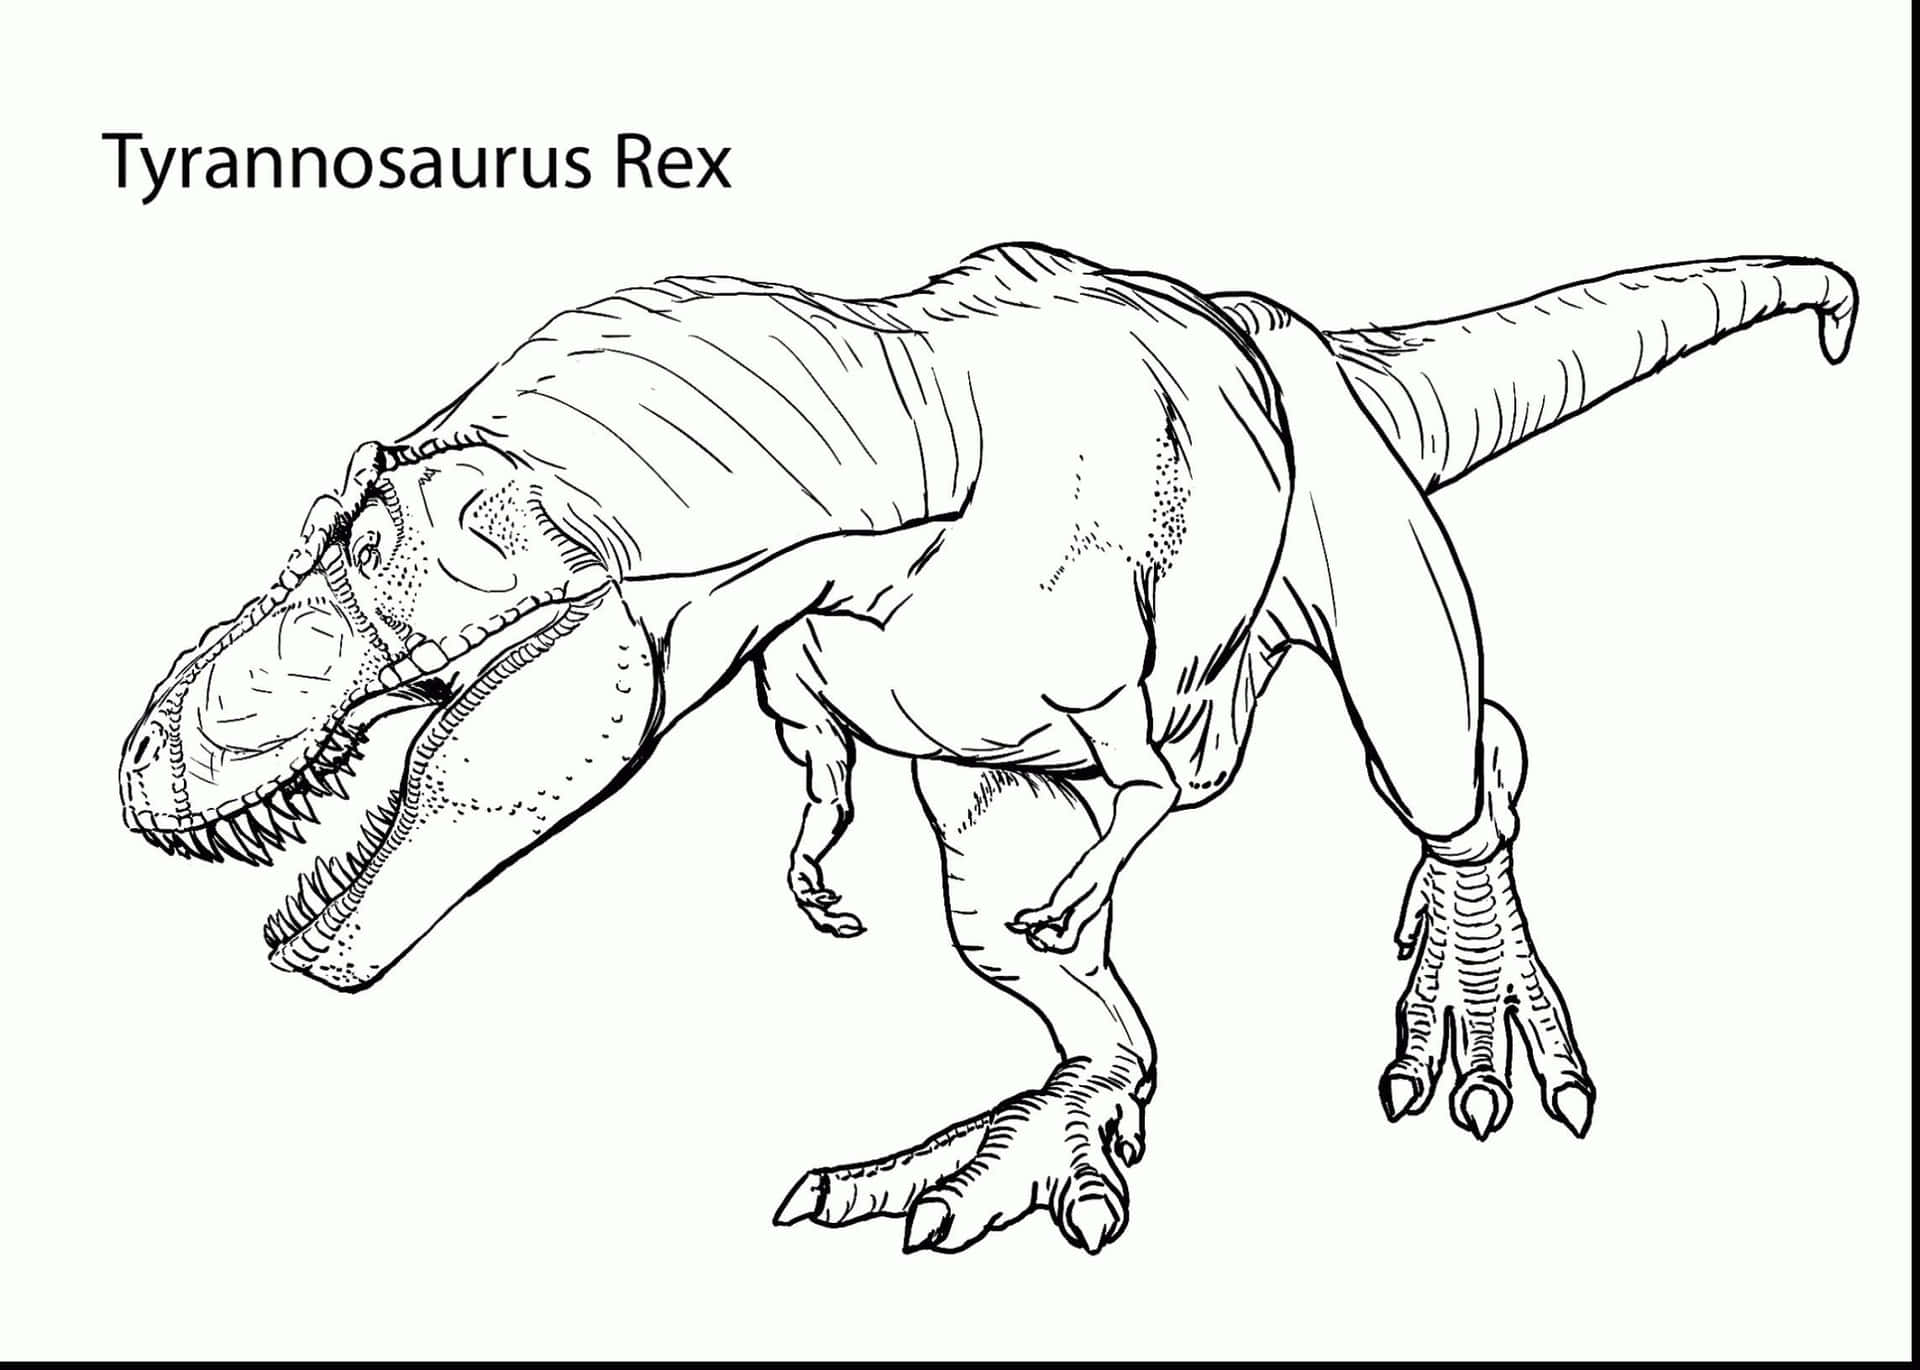 "Bringing the Prehistoric to Life: A Dinosaur Drawing"